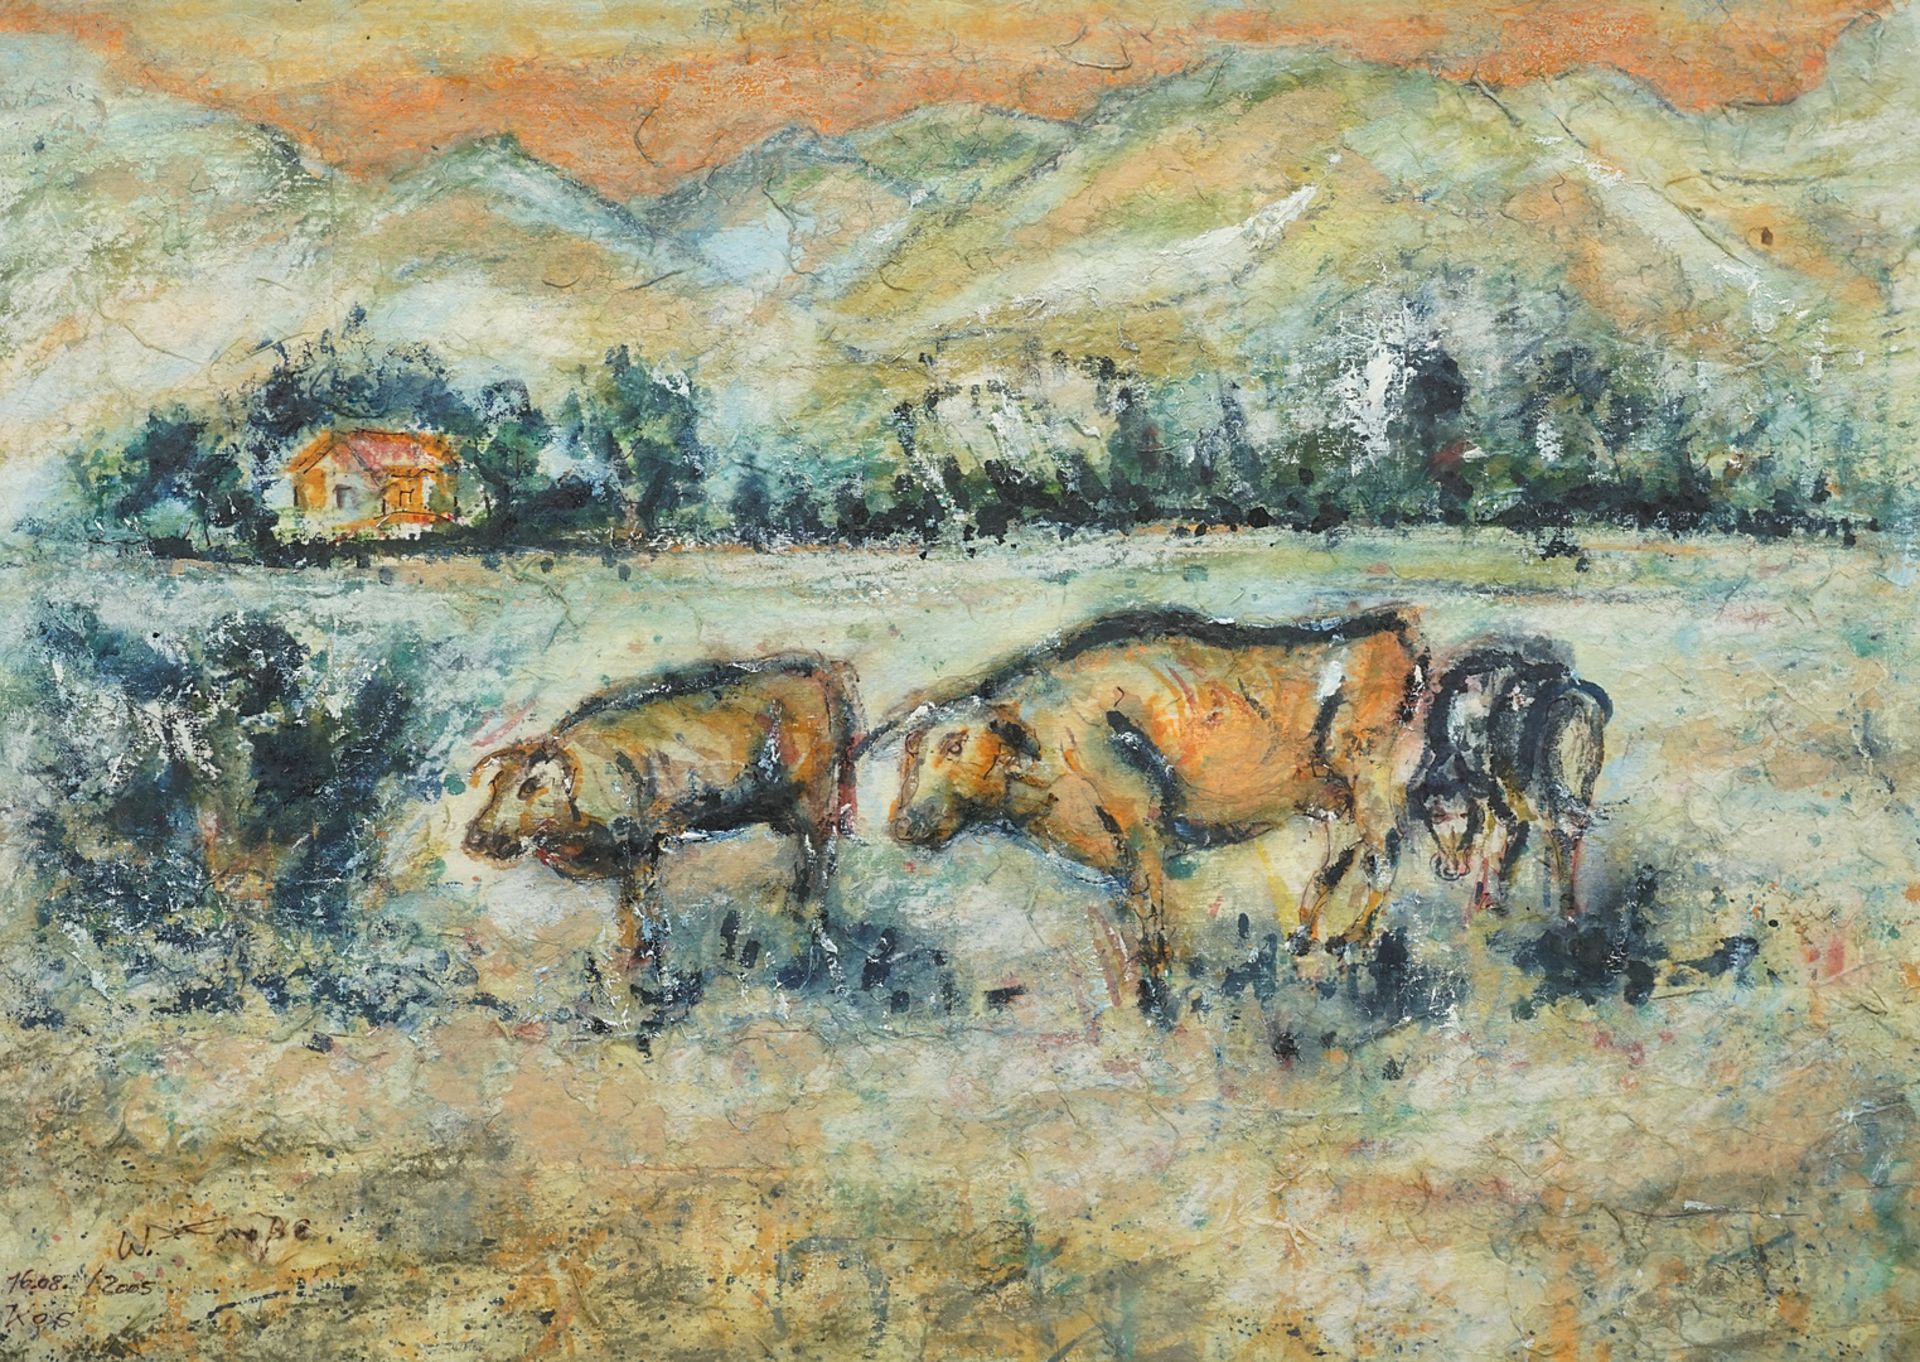 Wolfgang Große, The Poor Farmer, his Cows